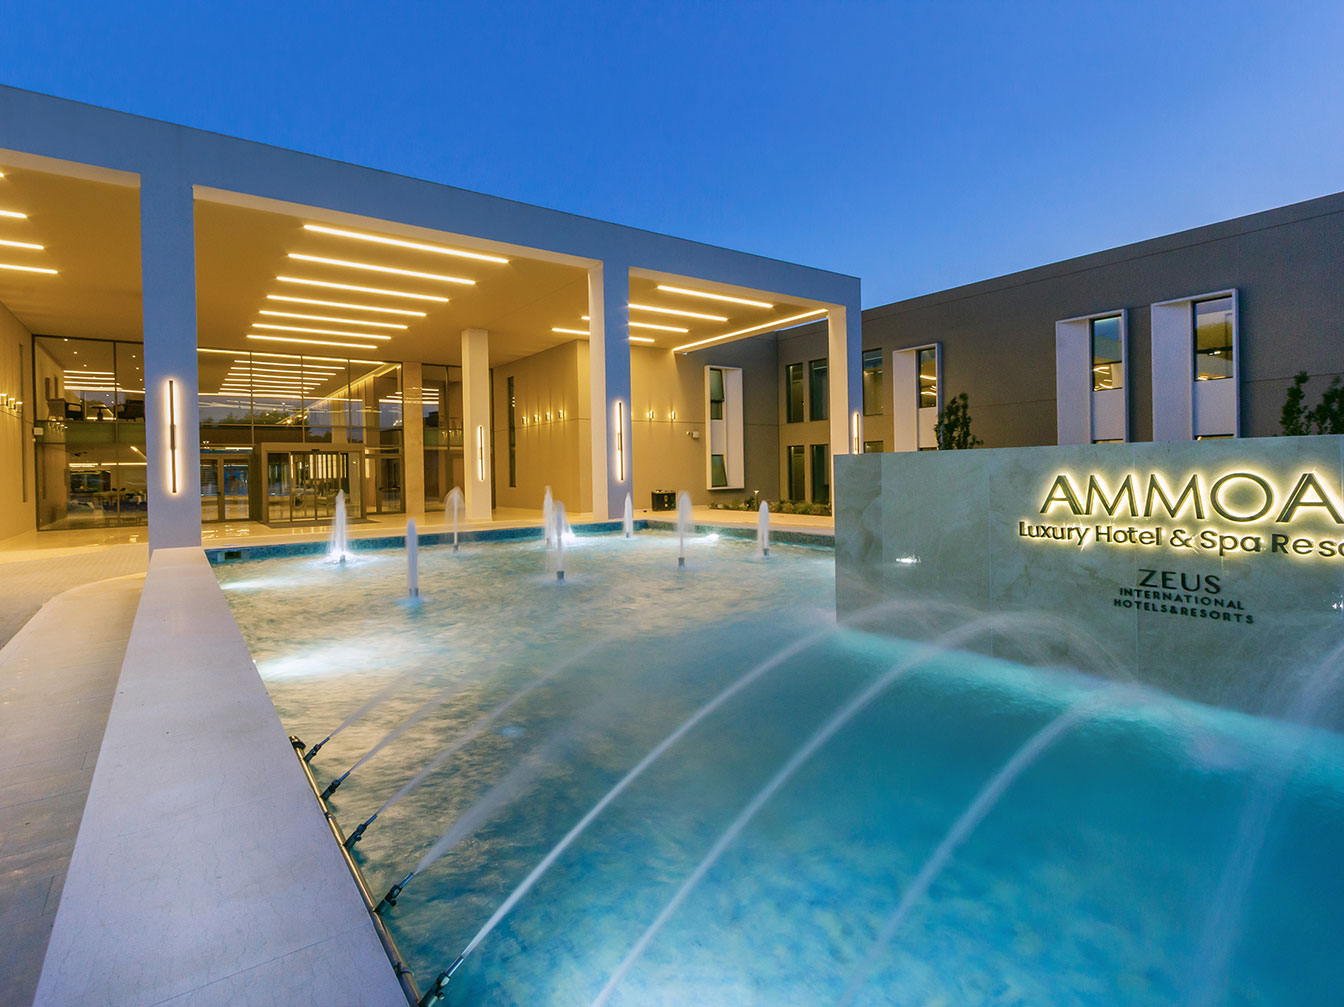 Ammoa Luxury Hotel and Spa Resort